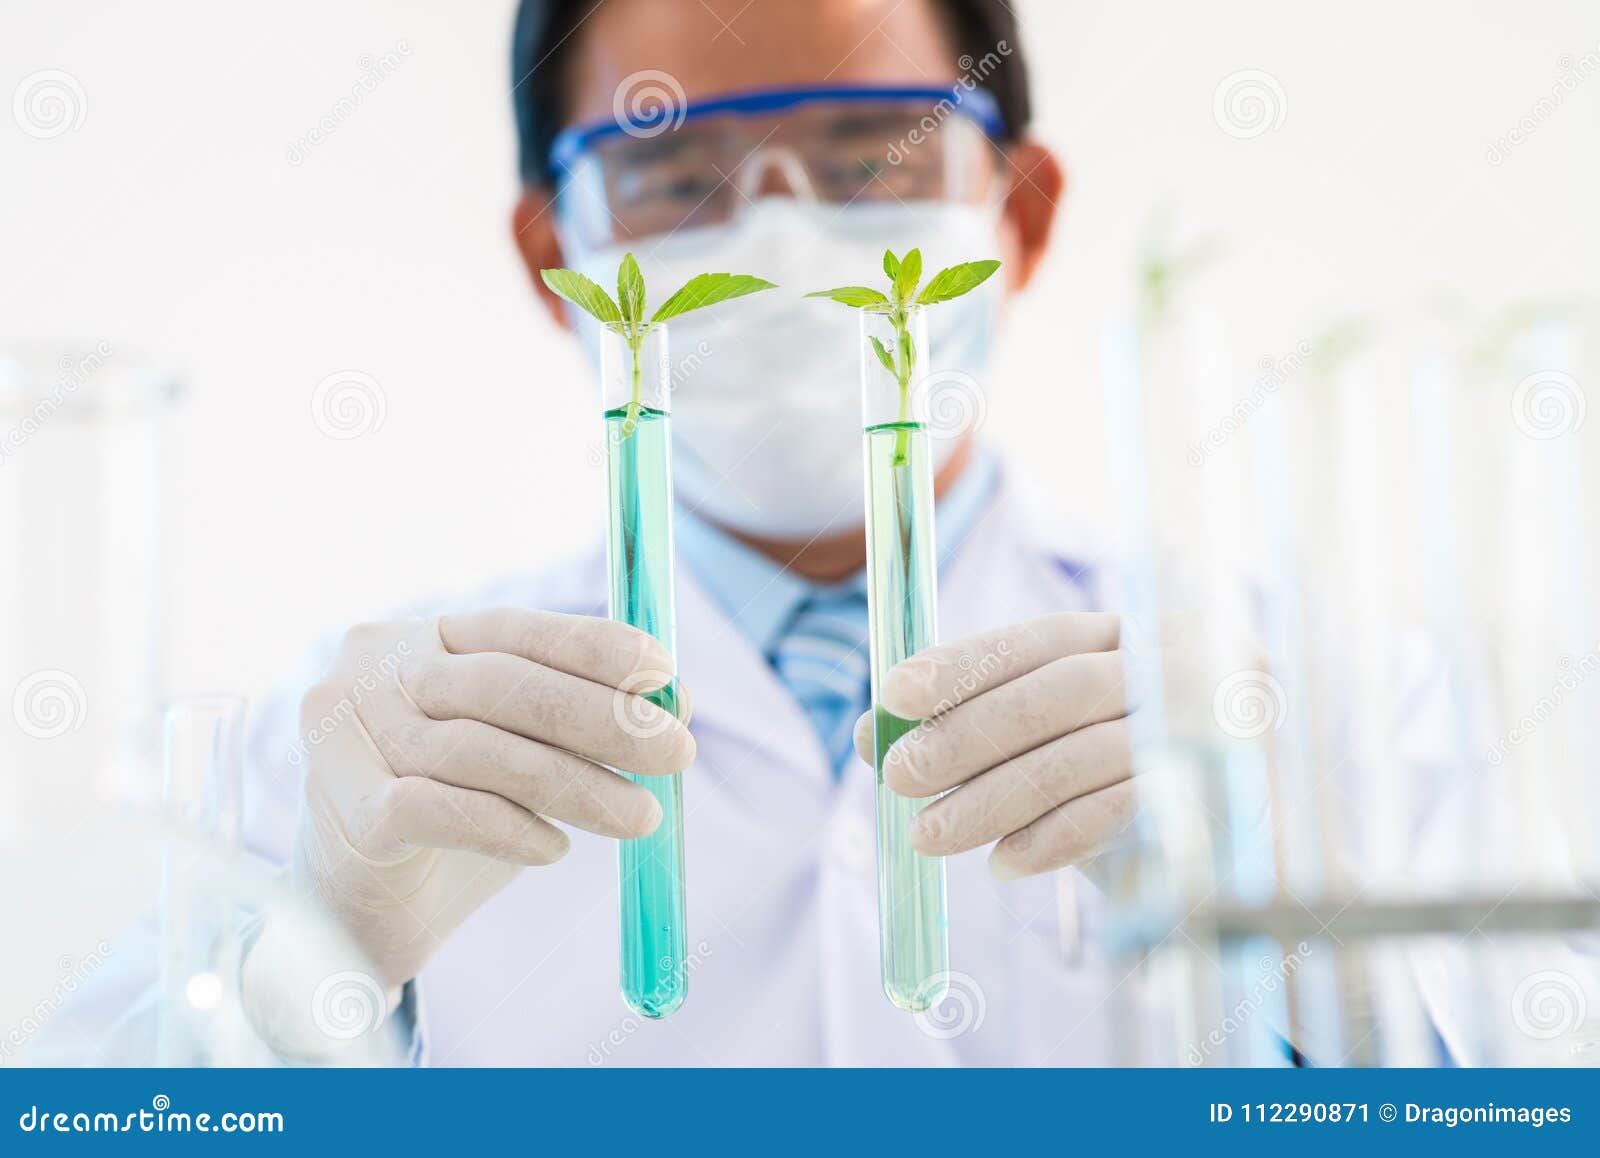 Testing GMO Plants stock image. Image of laboratory - 112290871